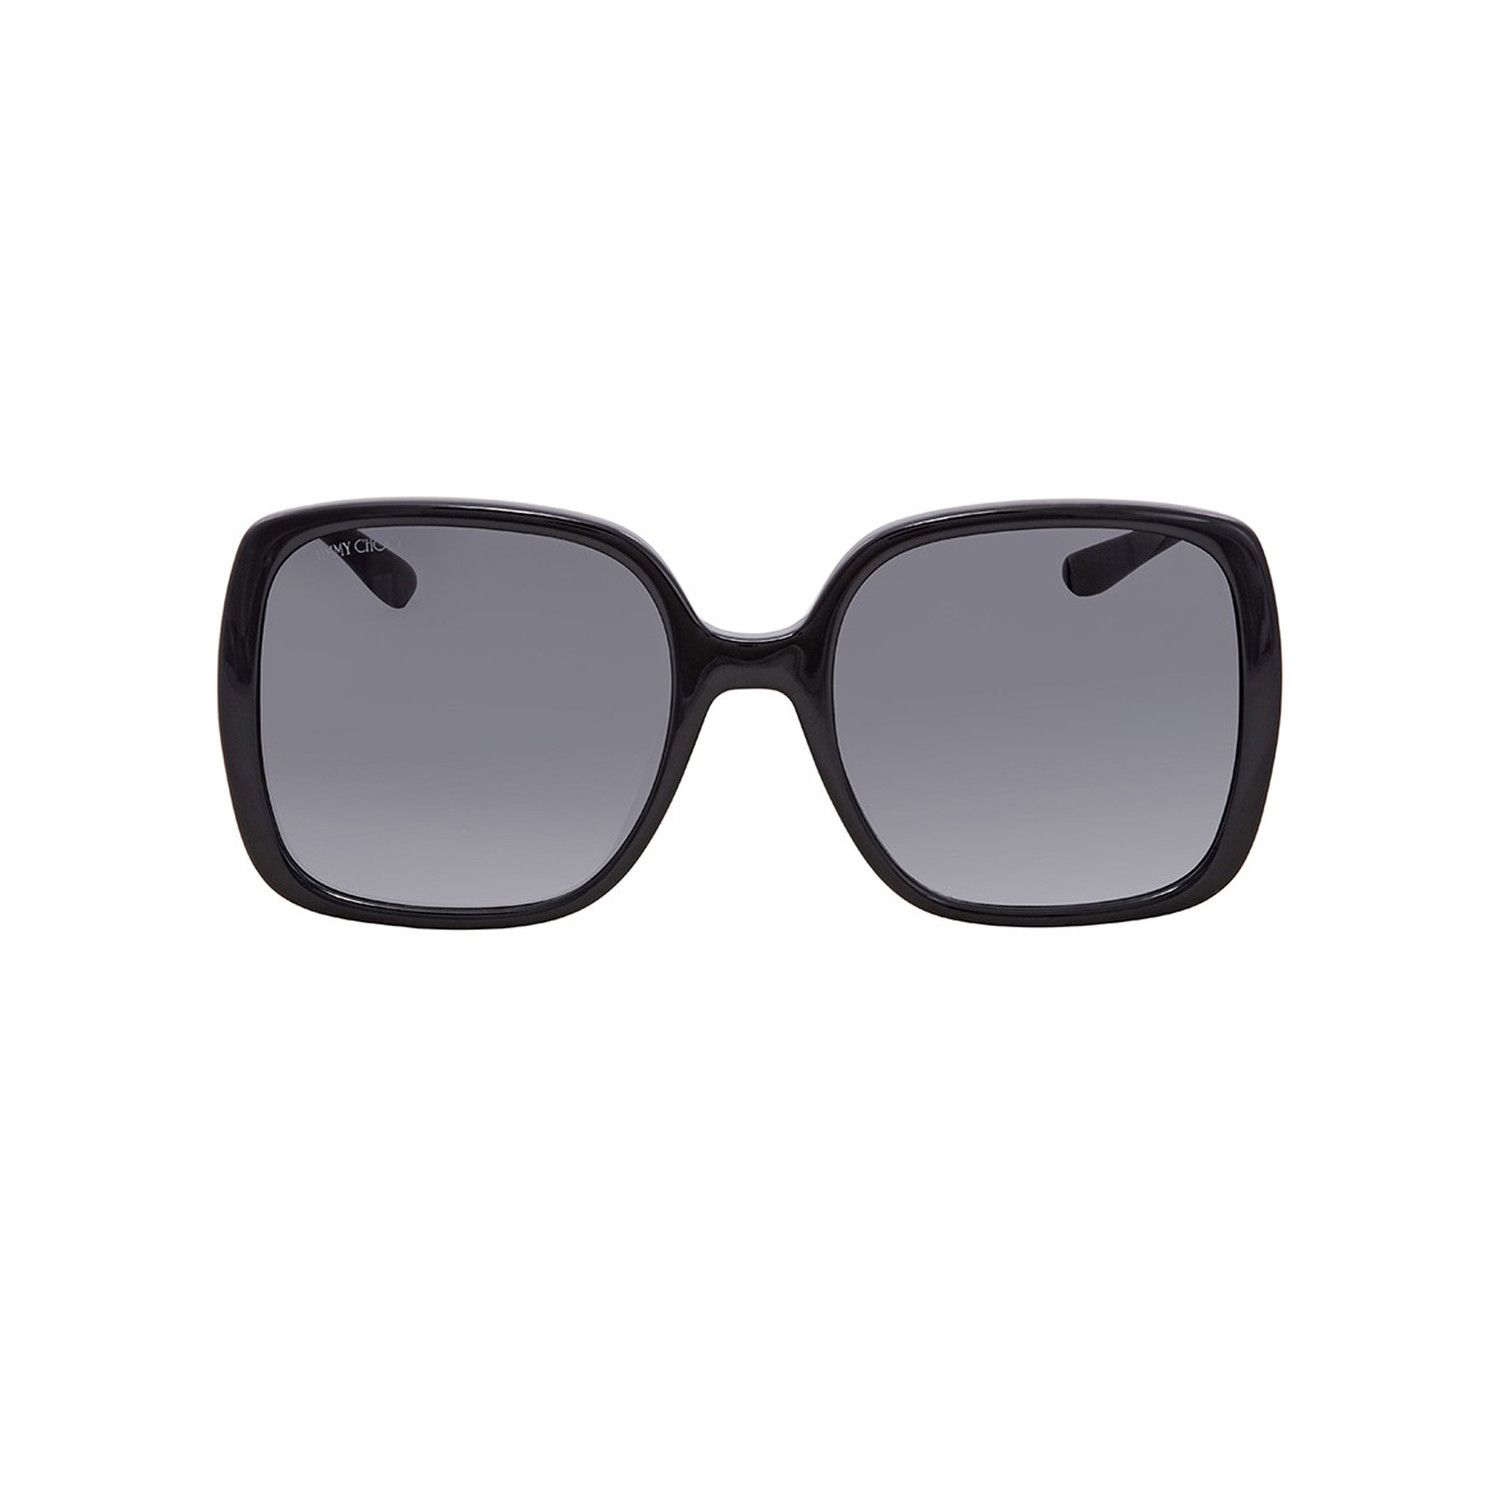 Jimmy Choo // Women's Chari Sunglasses // Black + Silver - Dior, Celine ...